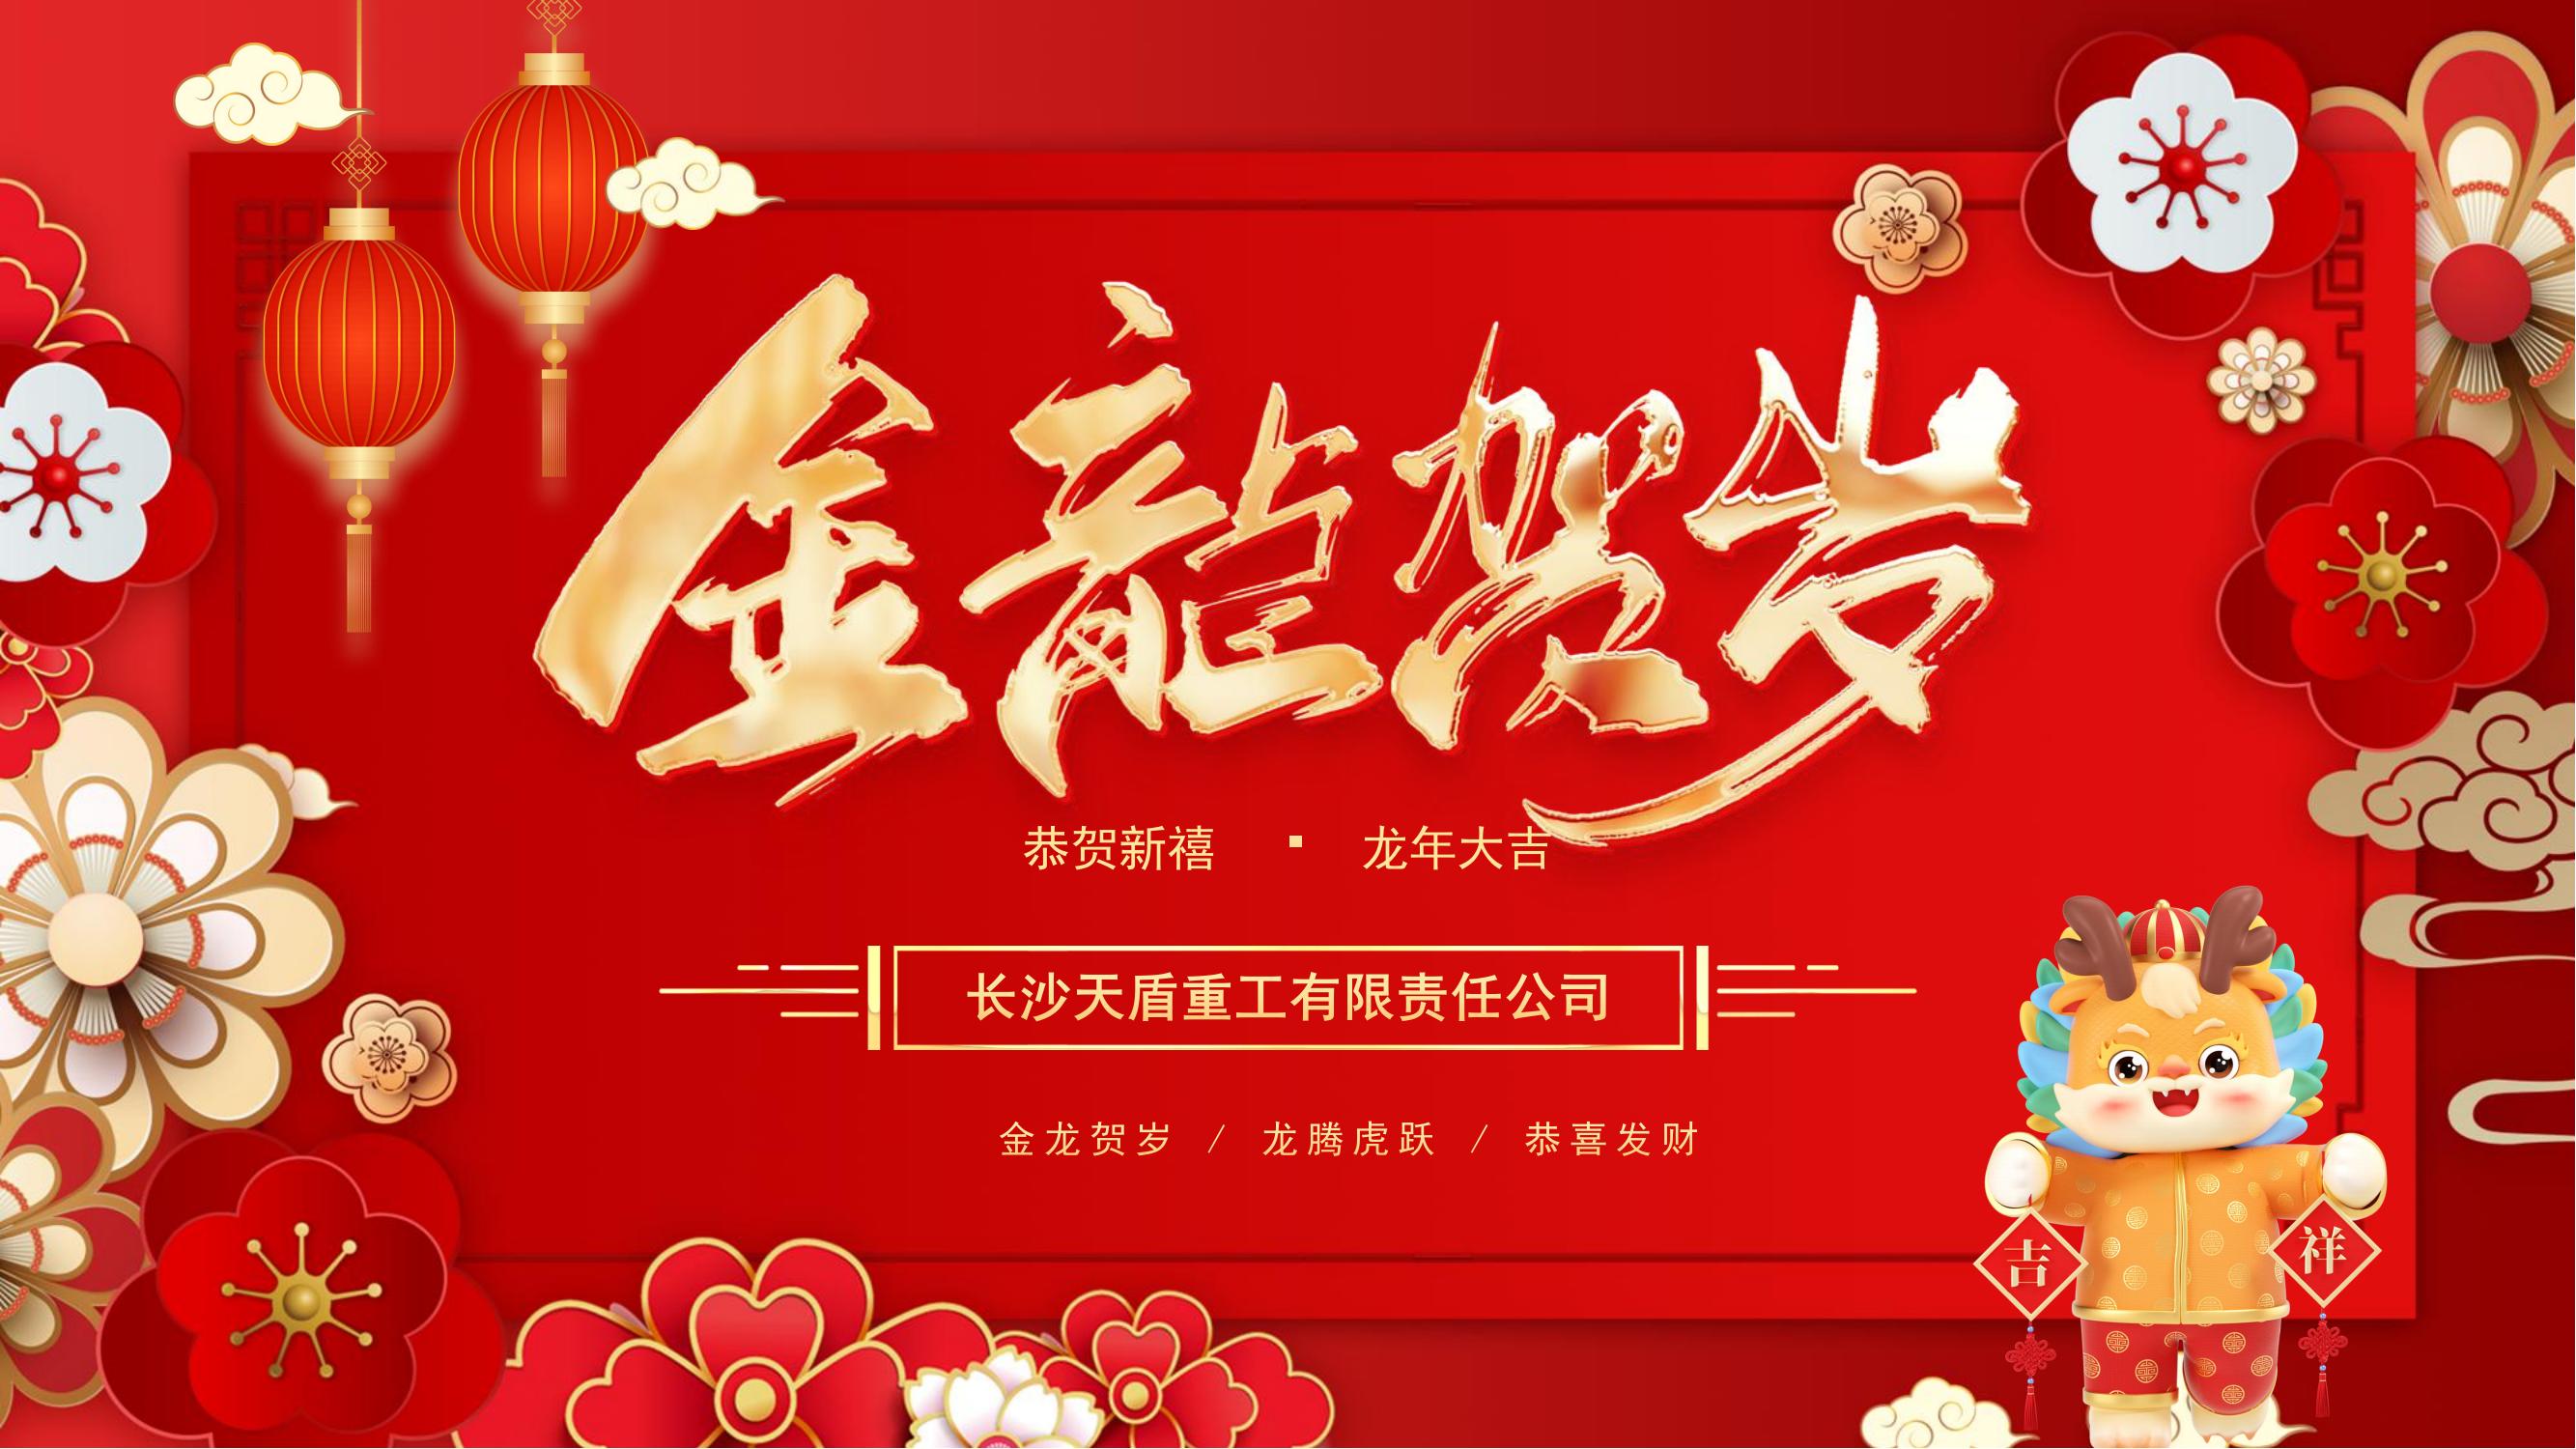 SKYBOOM wish you Happy Chinese New Year！